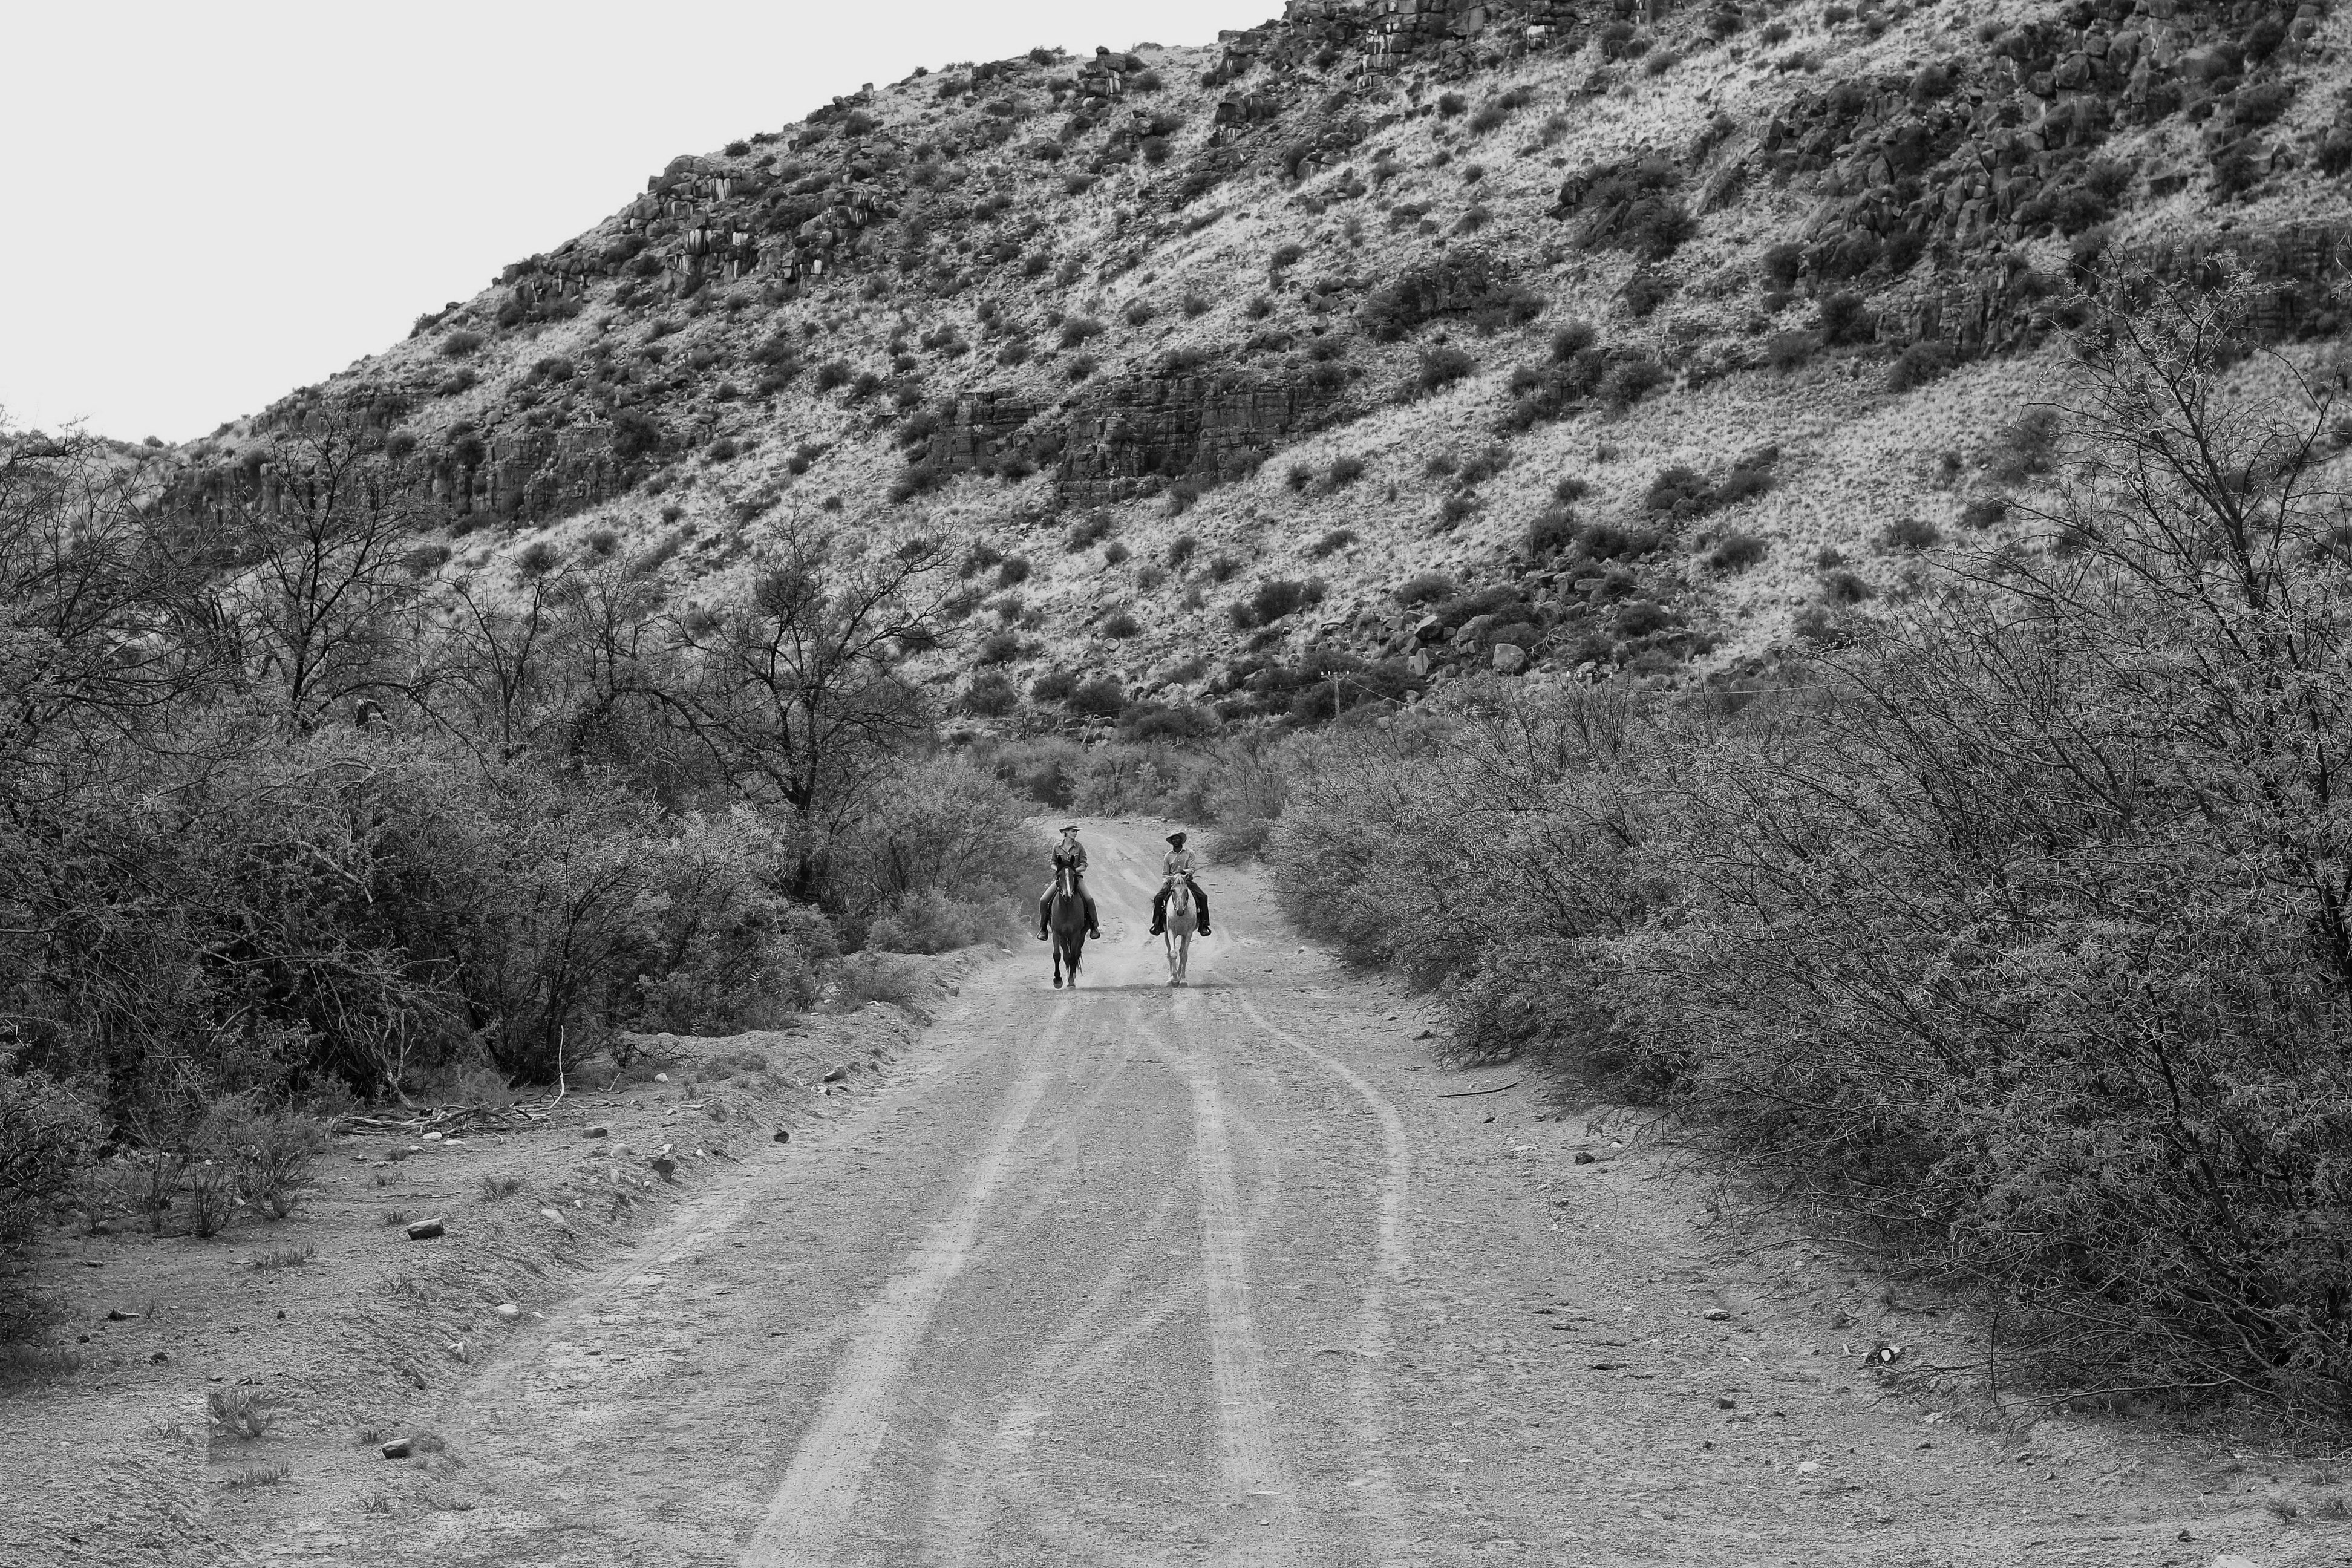 Julie and Pieter riding through the Sneeuberg range.